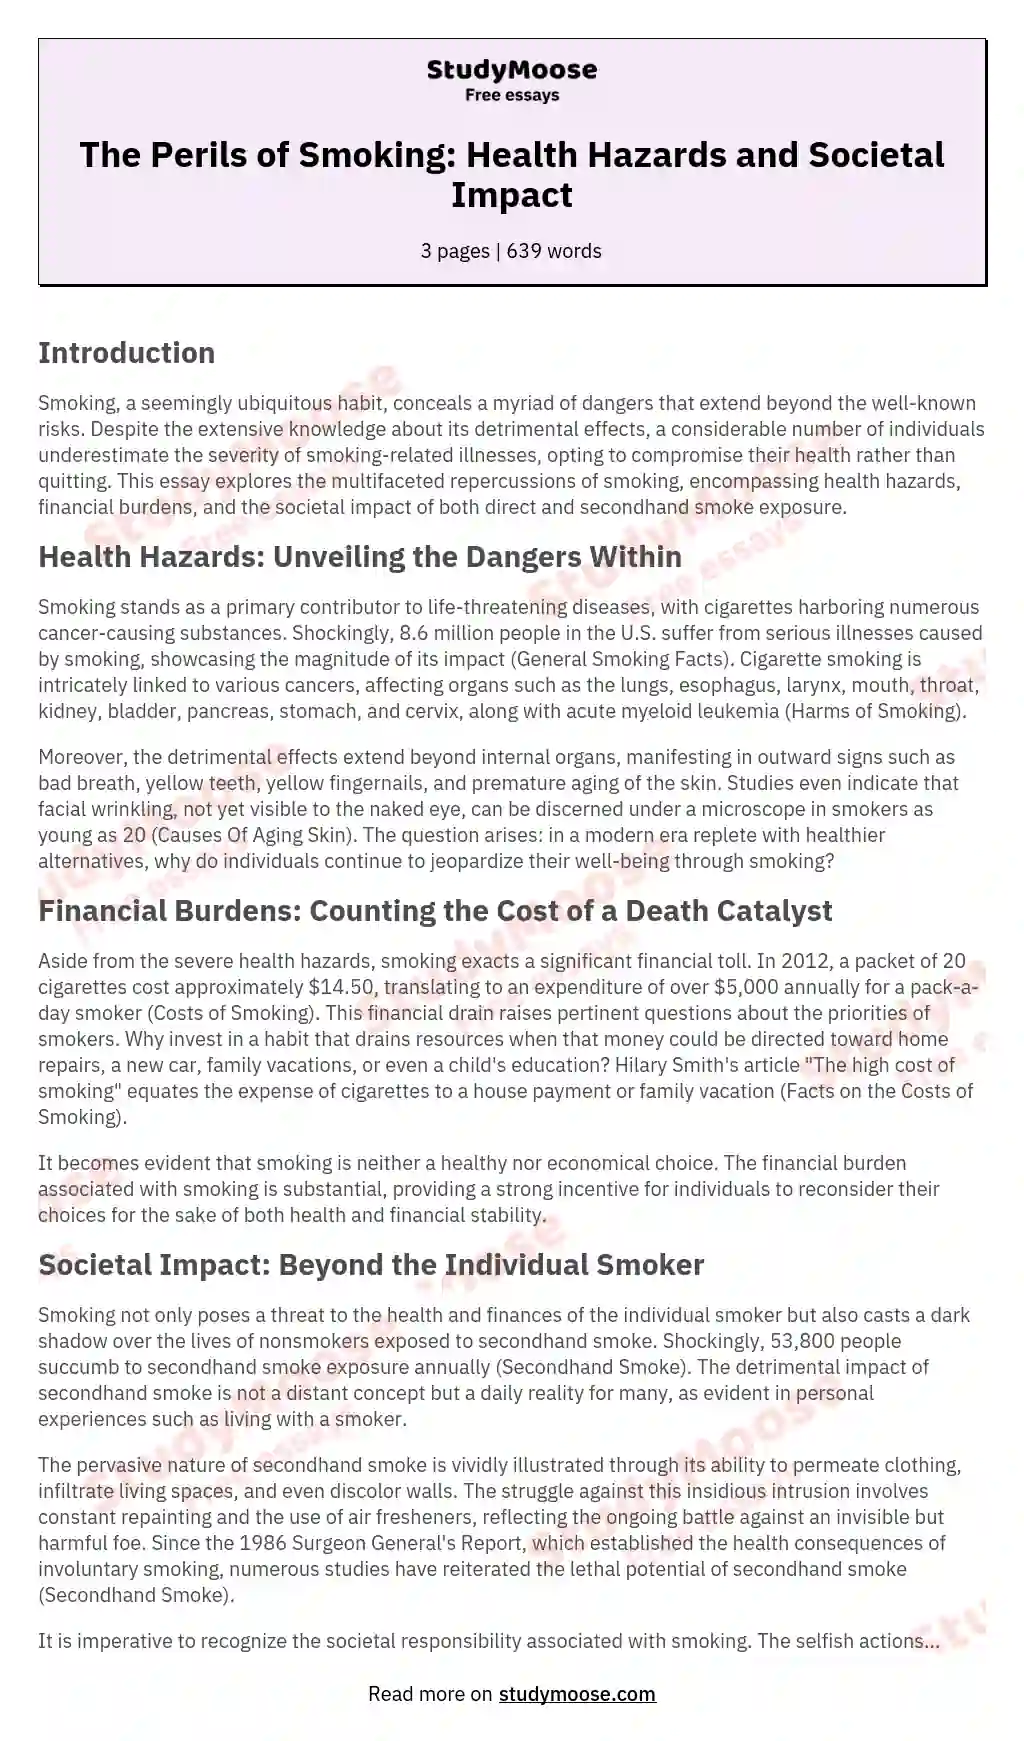 The Perils of Smoking: Health Hazards and Societal Impact essay